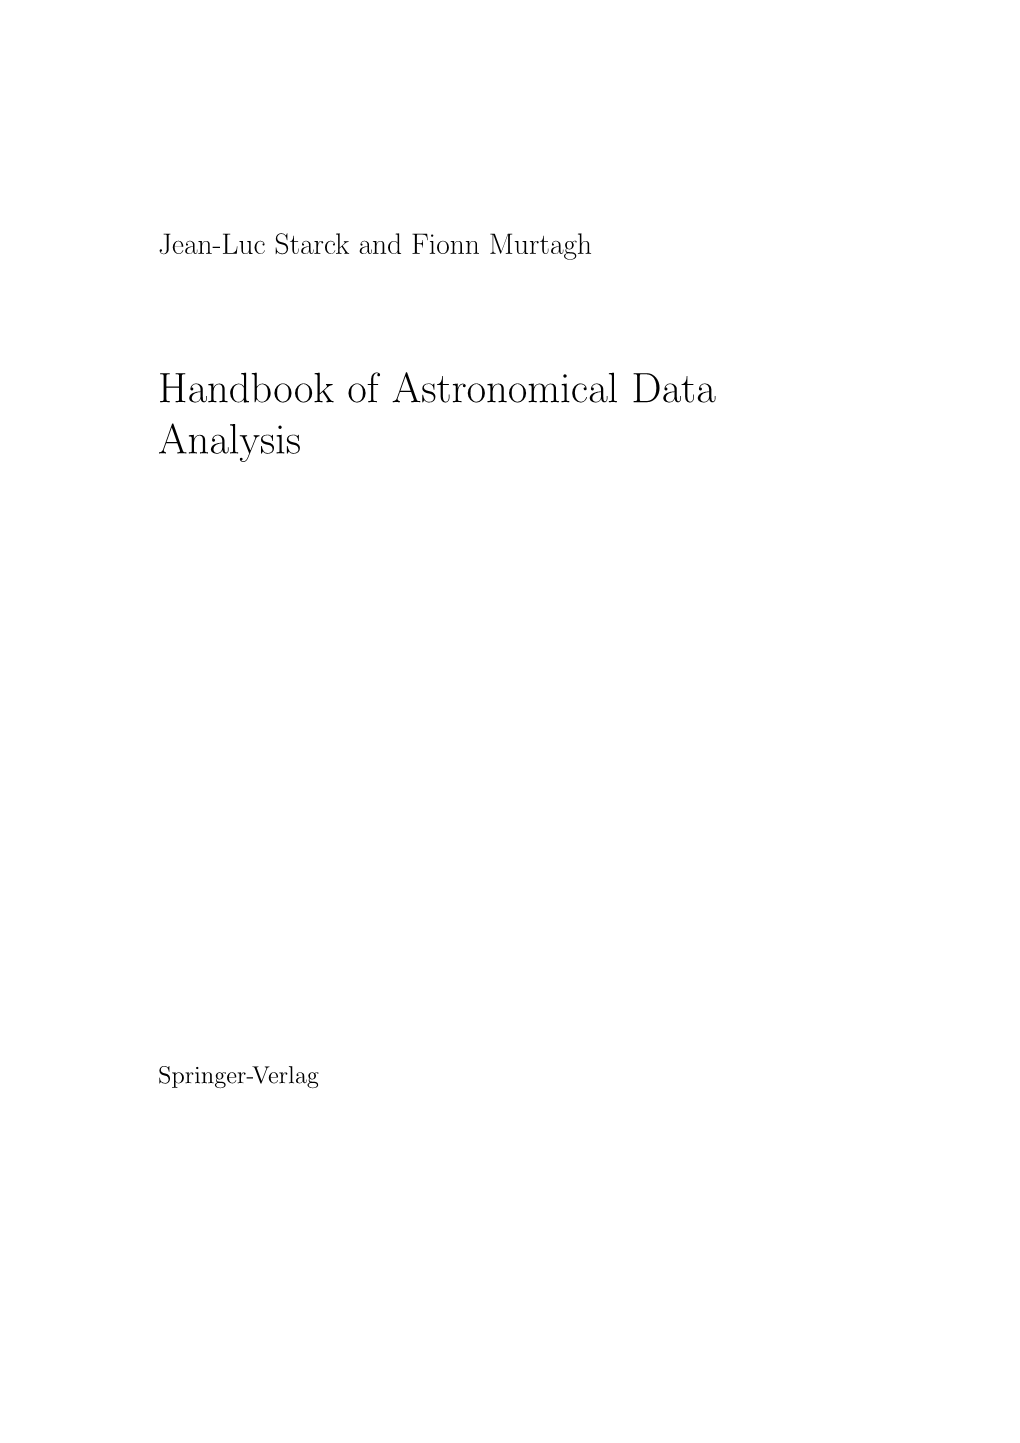 Handbook of Astronomical Data Analysis